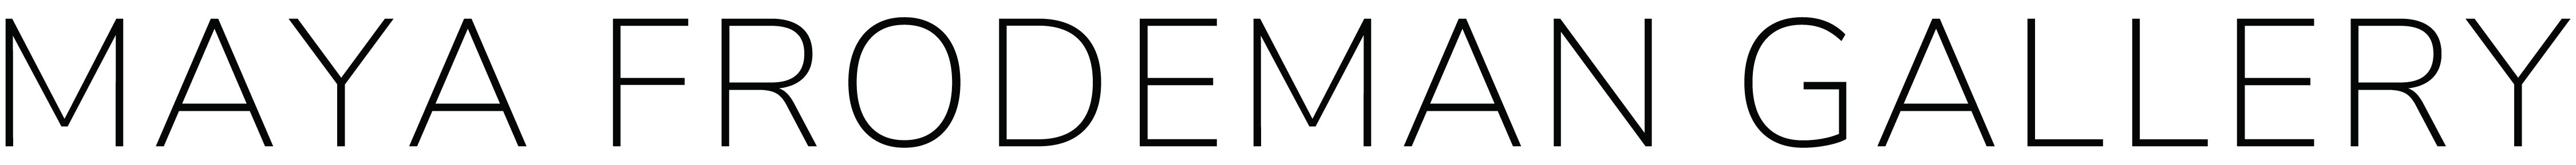 Maya Frodeman Gallery company logo